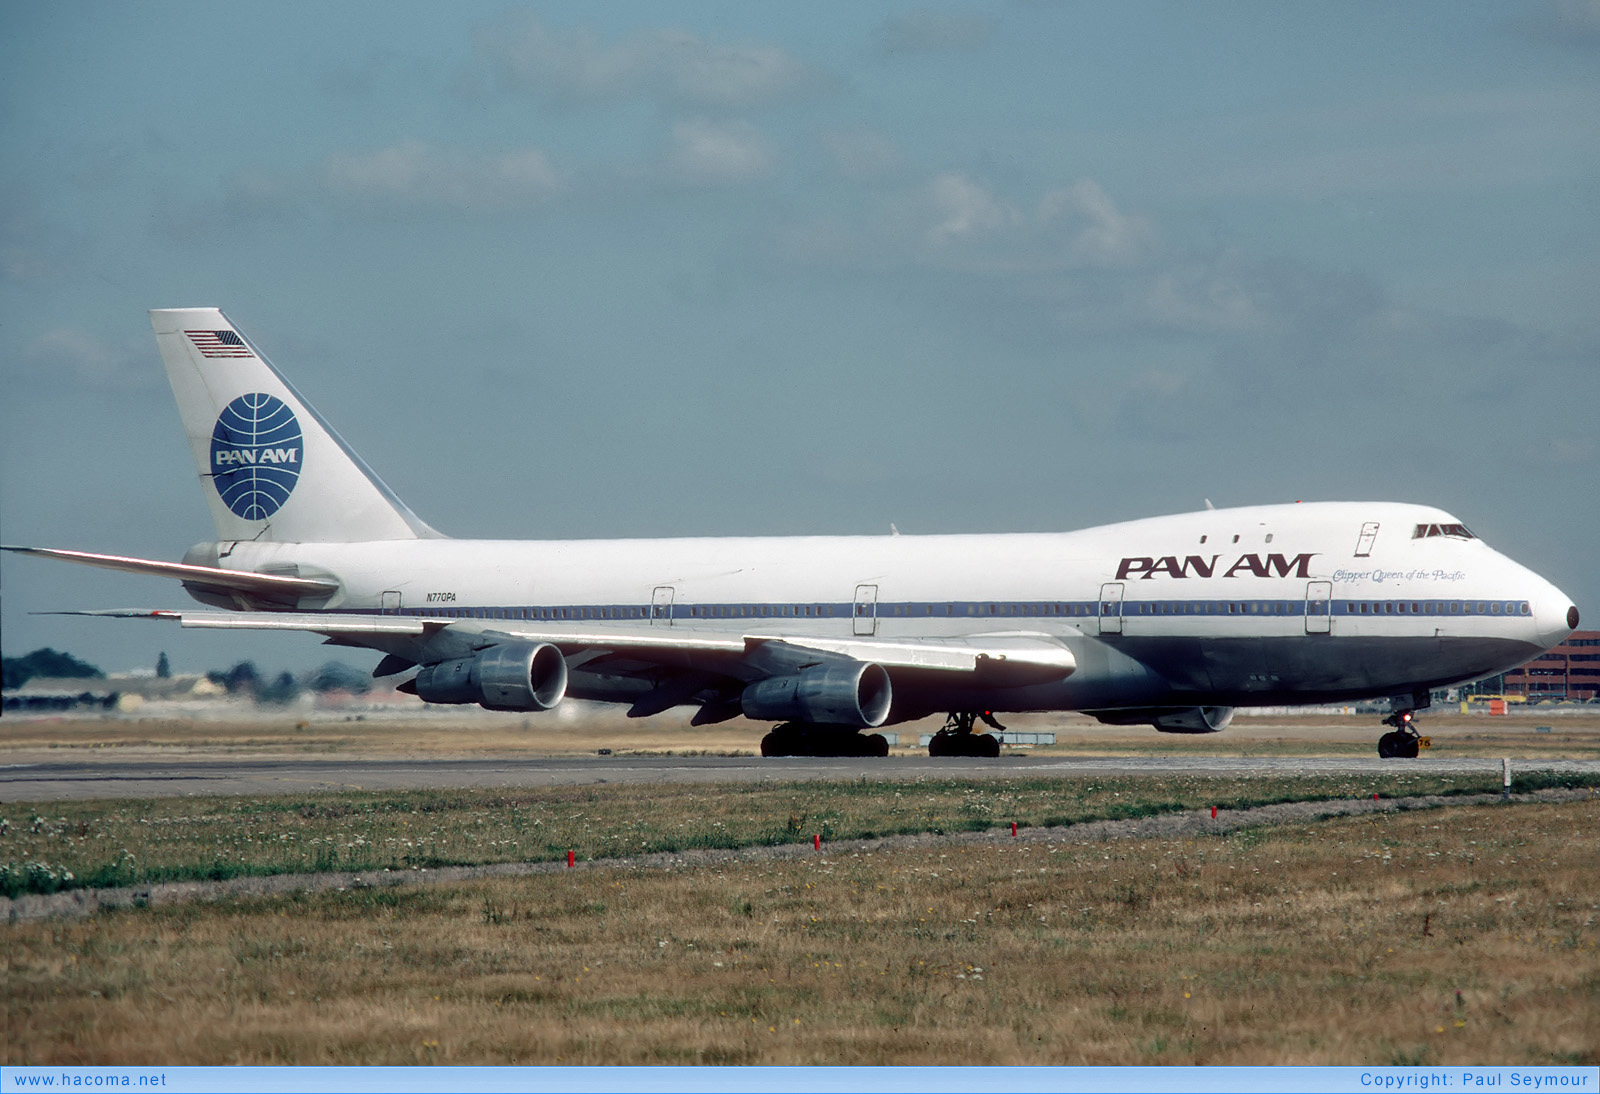 Photo of N770PA - Pan Am Clipper Great Republic / Bald Eagle - London Heathrow Airport - Aug 11, 1984